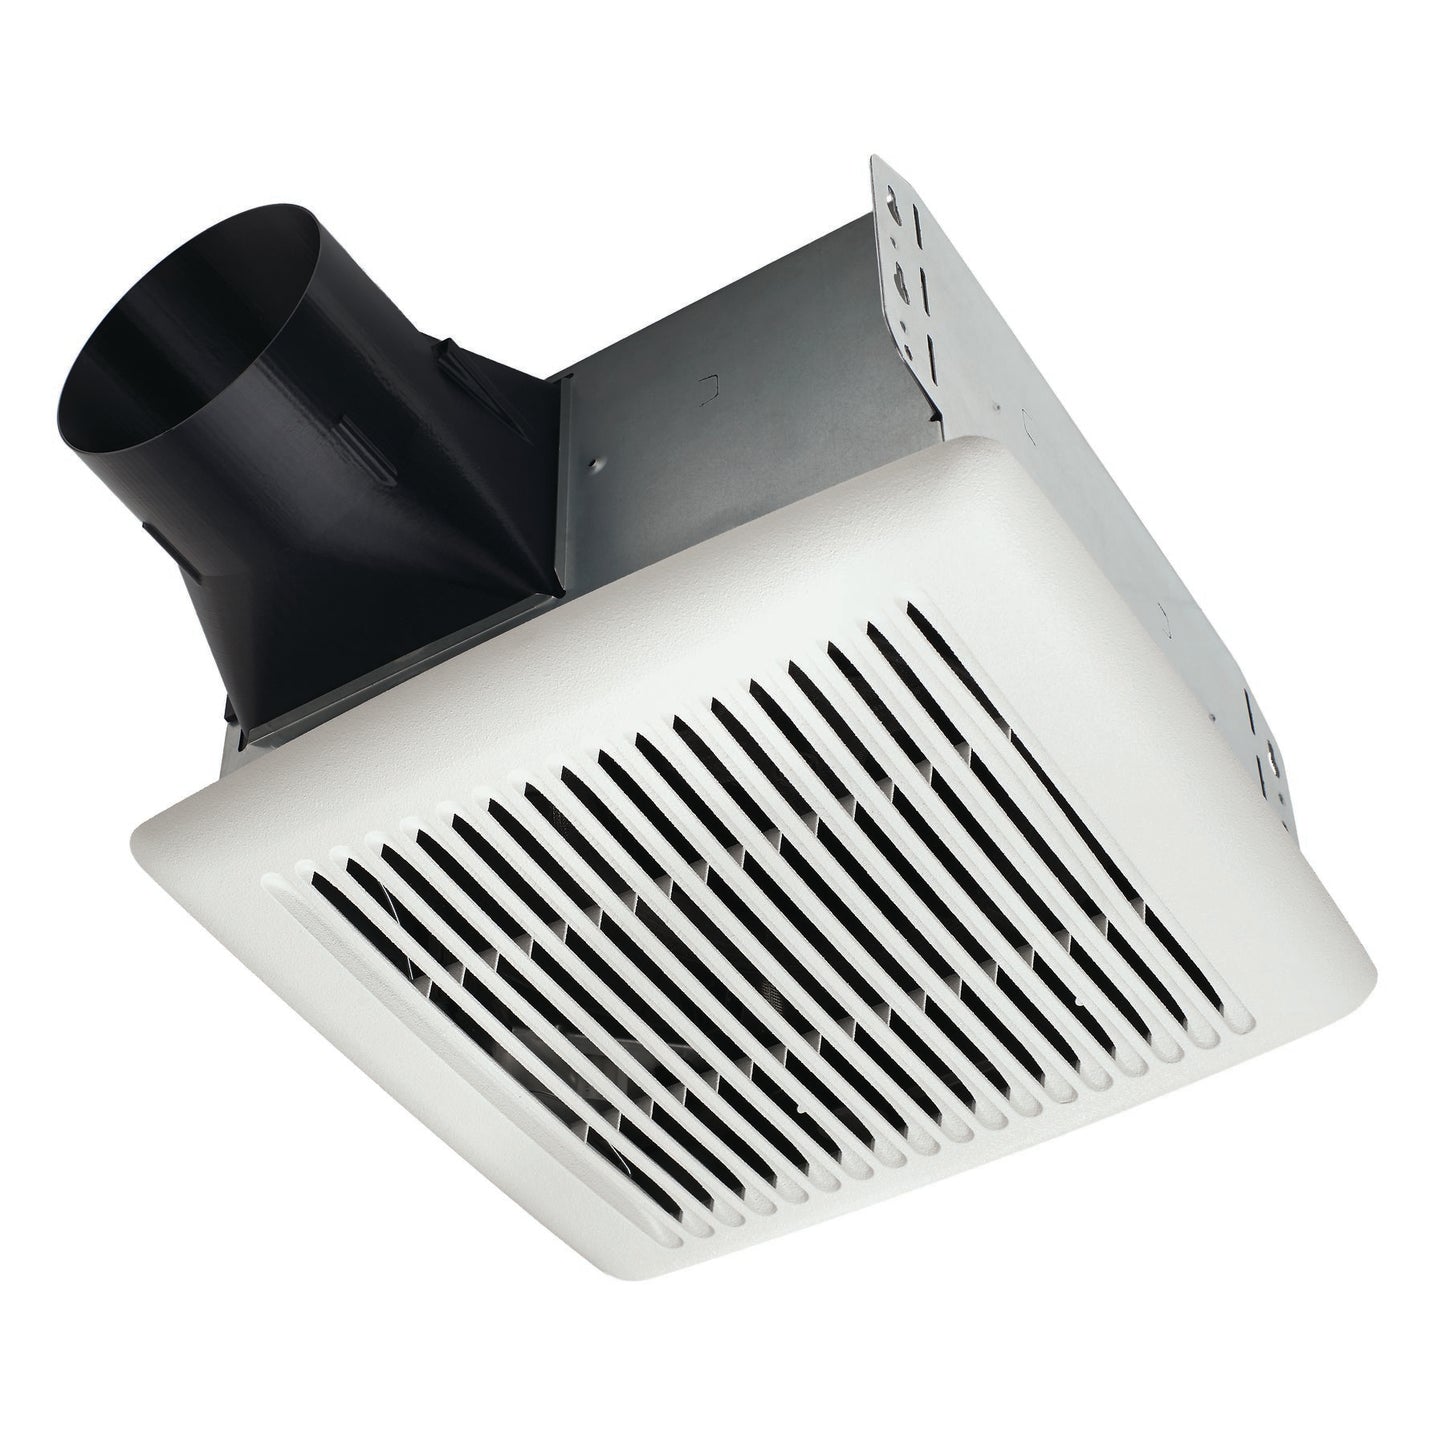 A80 - Flex Series Ceiling / Wall Bathroom Exhaust Fan - 2.0 Sones - 80 CFM